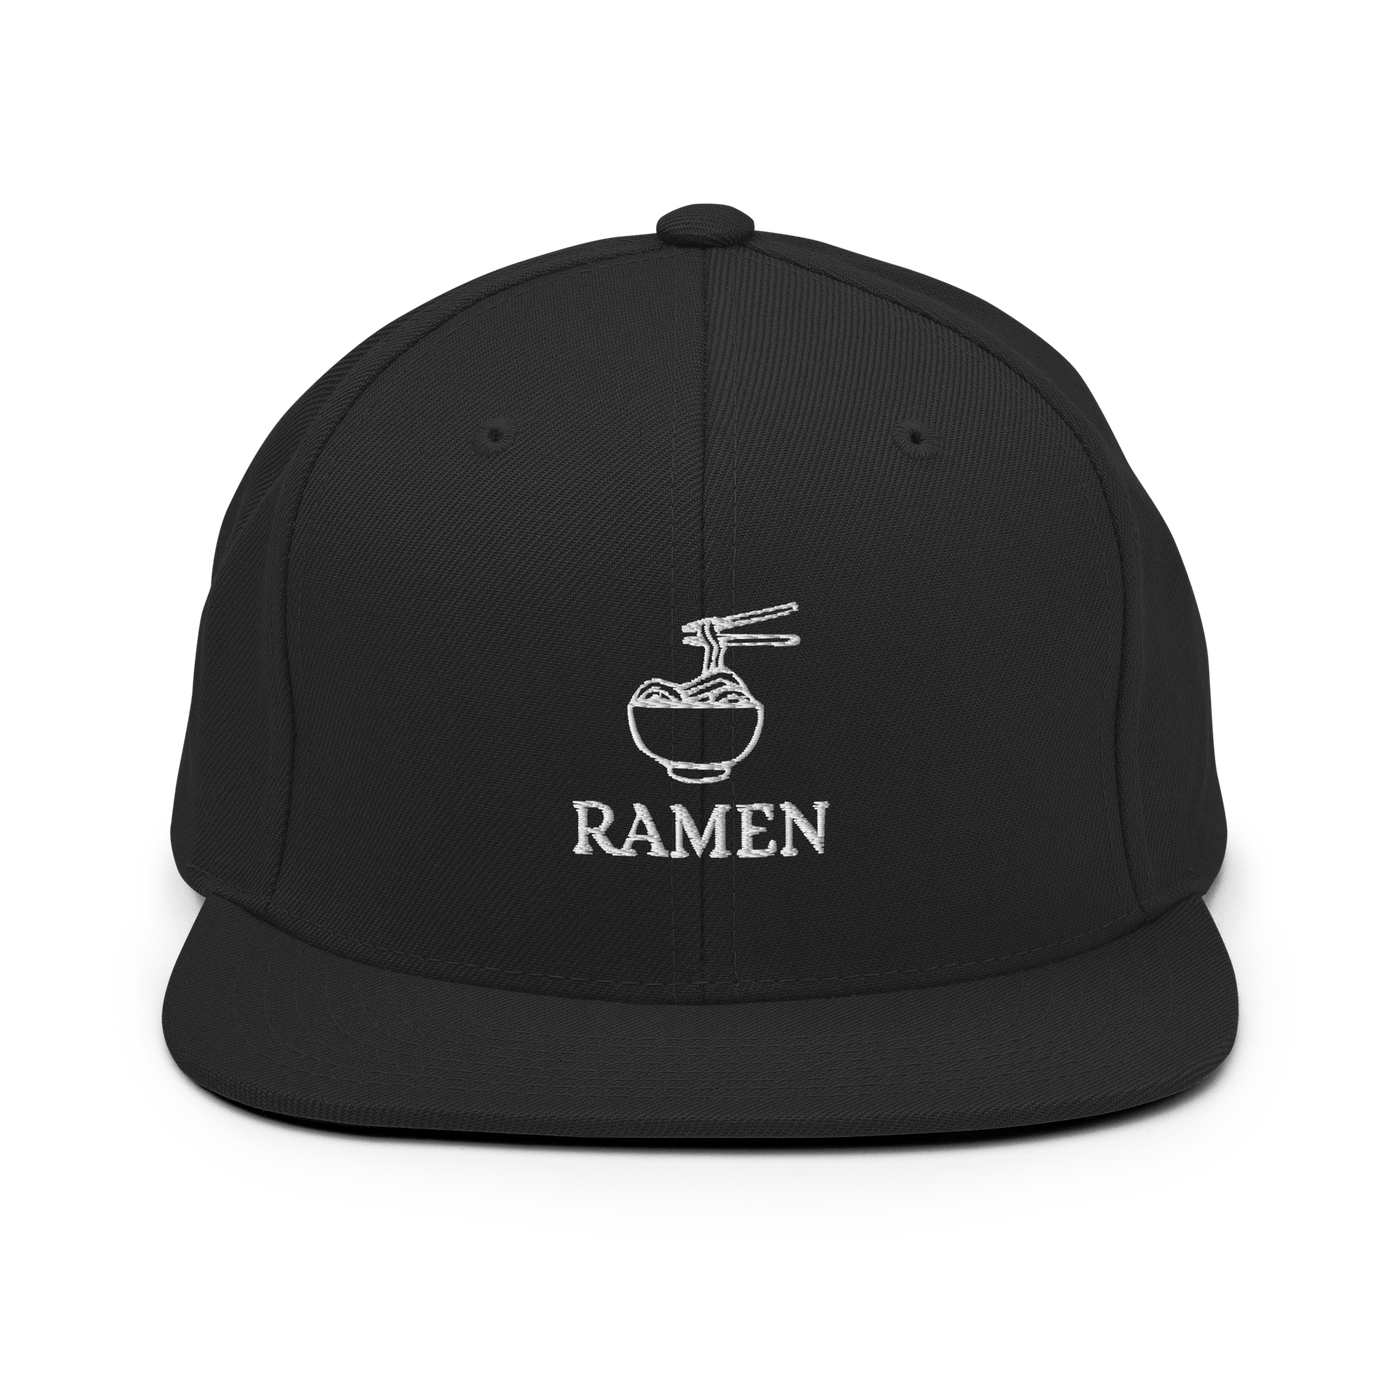 Ramen Bowl Snapback Hat - Black - - Just Another Cap Store